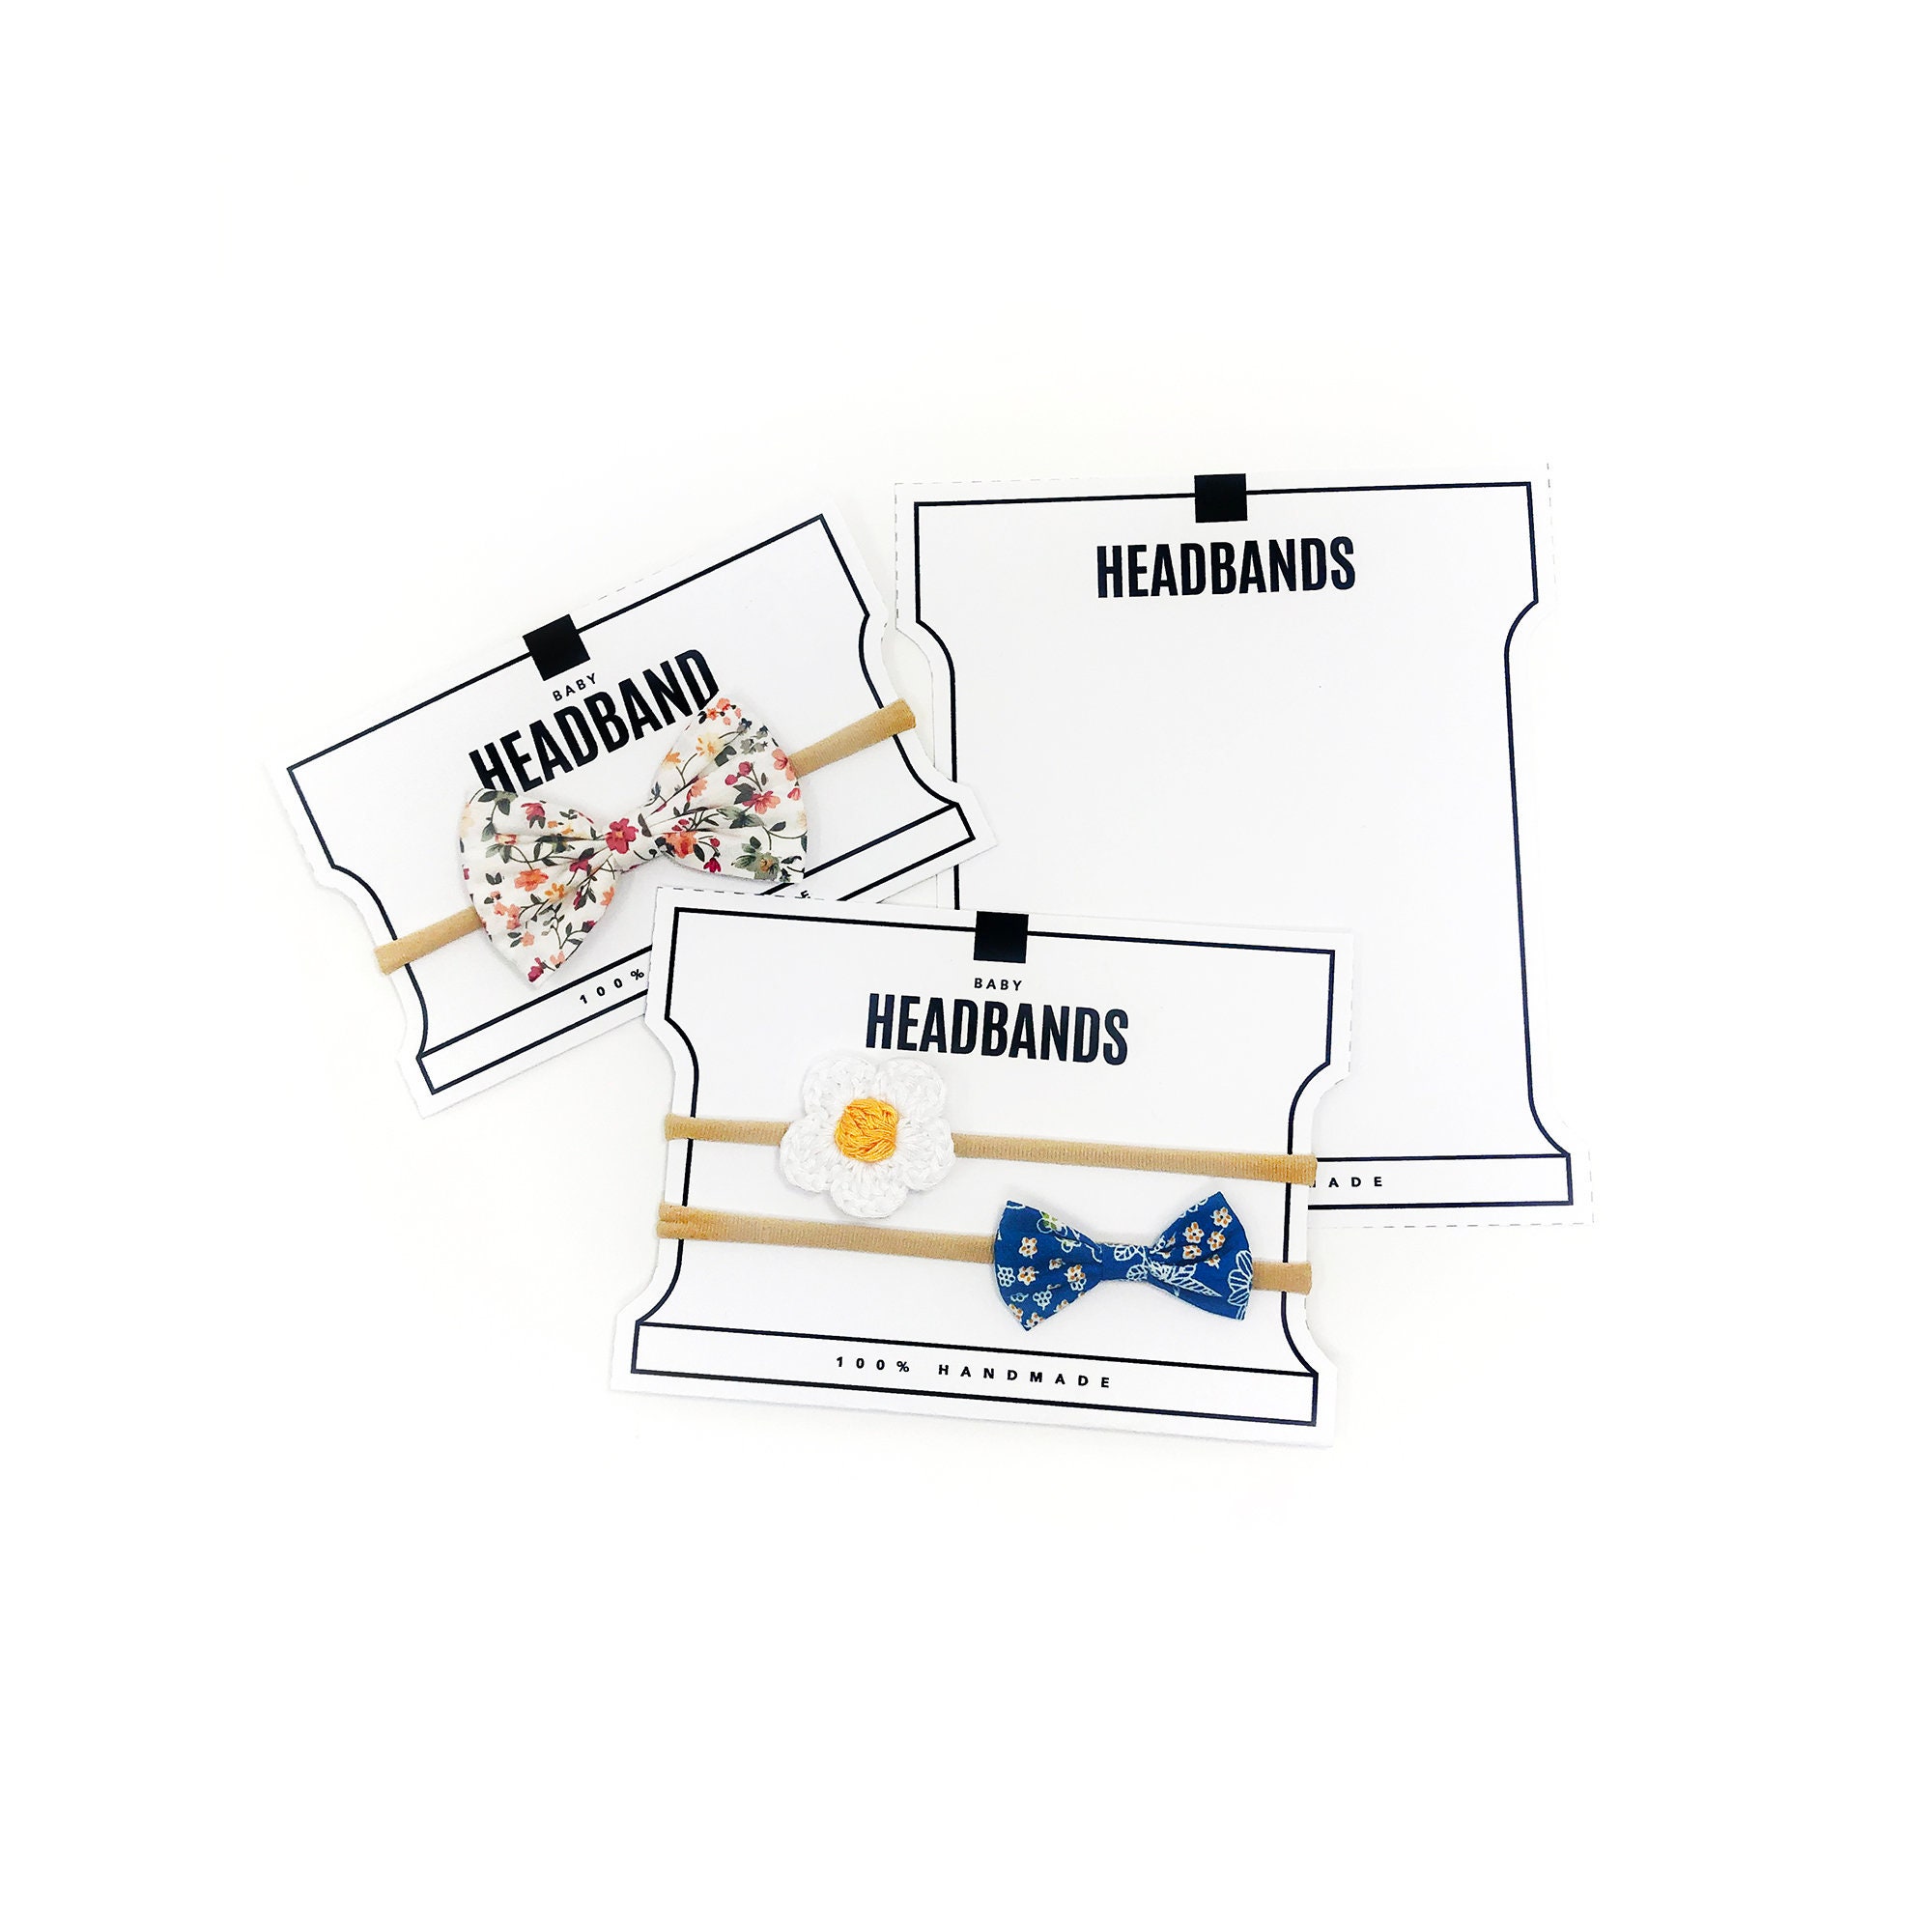 headbands-cards-ubicaciondepersonas-cdmx-gob-mx